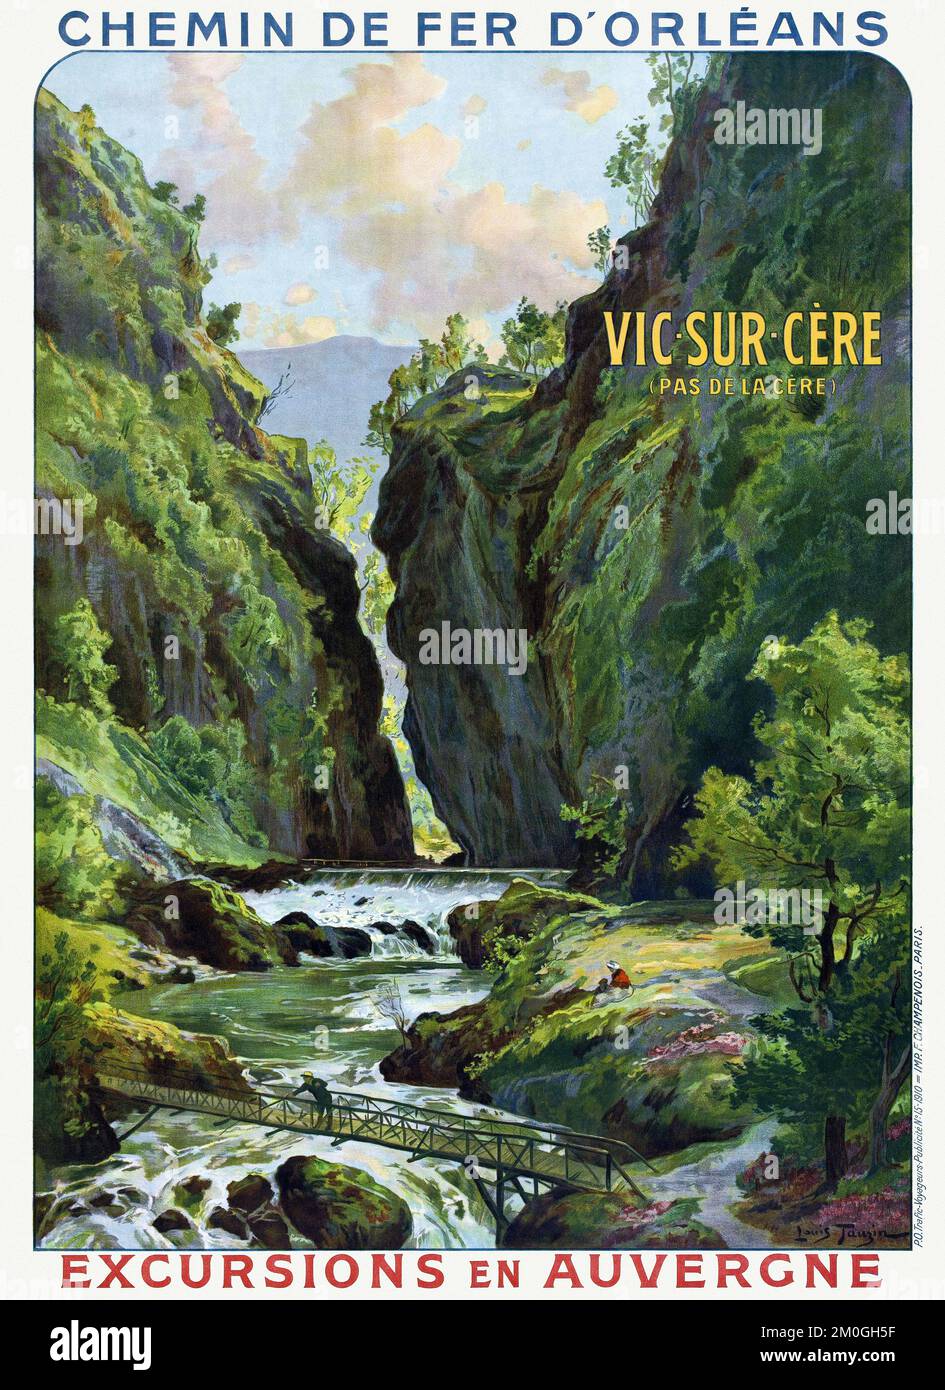 Chemins de fer d'Orléans. VIC-sur-Cère (Pas de la Cère) Ausflüge in die Auvergne von Louis Tauzin (1842-1915). Poster wurde 1910 in Frankreich veröffentlicht. Stockfoto